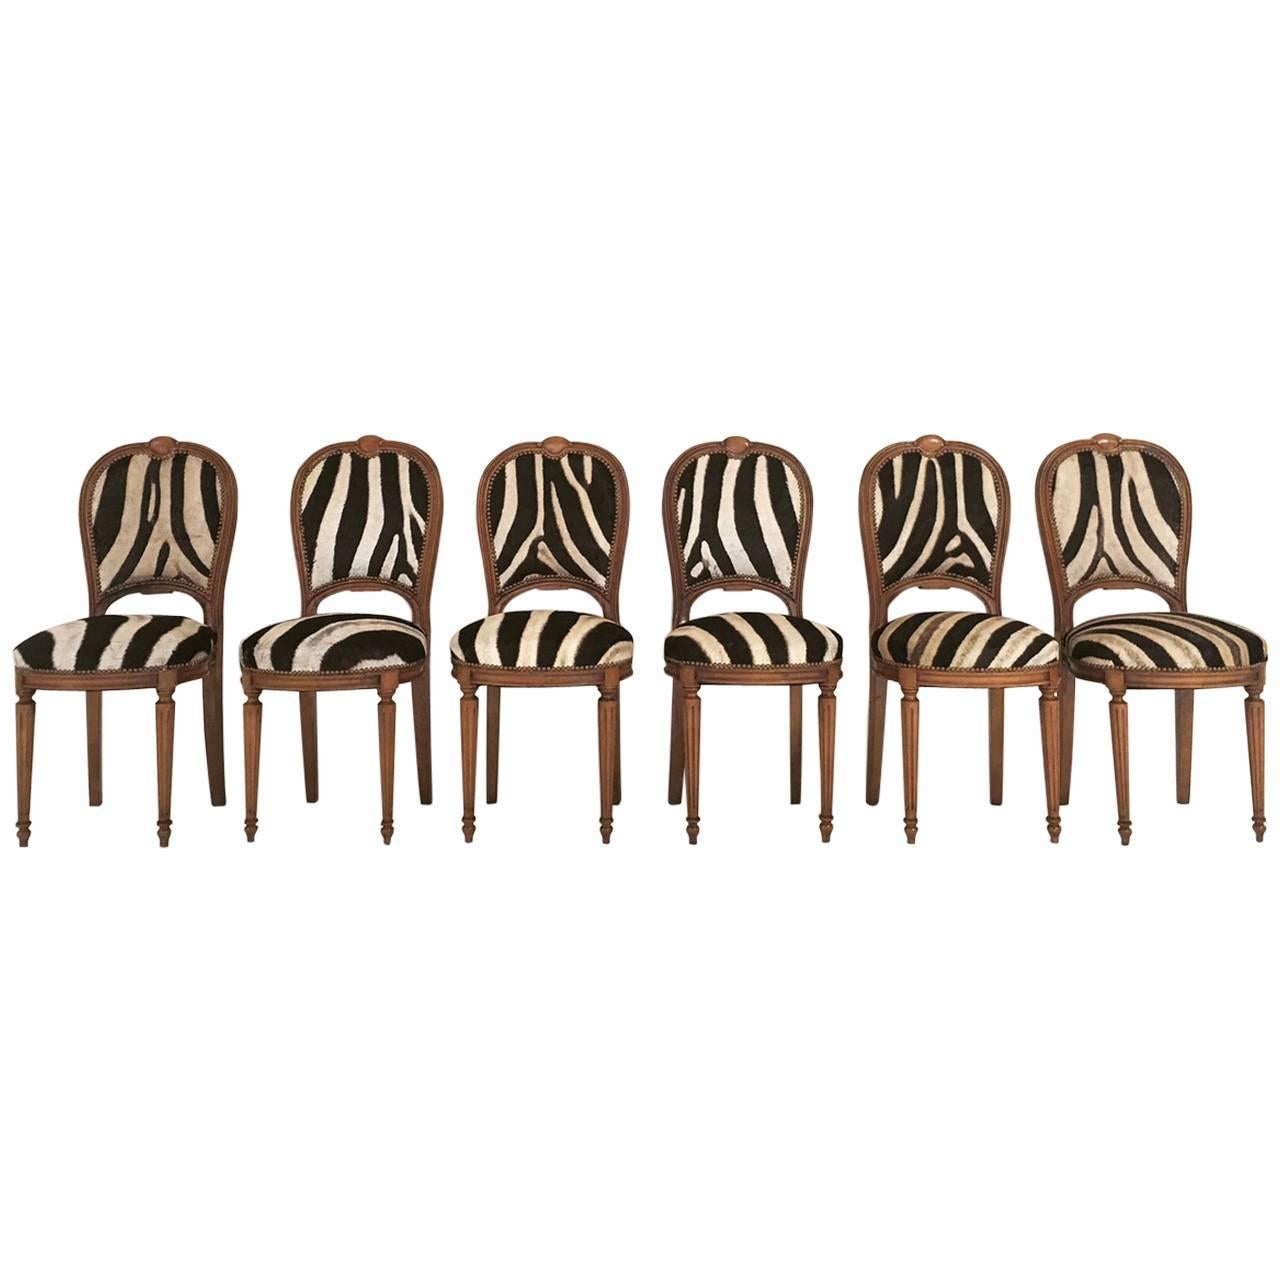 Vintage Maison Jansen Louis XVI Style Dining Chairs in Zebra Hide, Set of Six